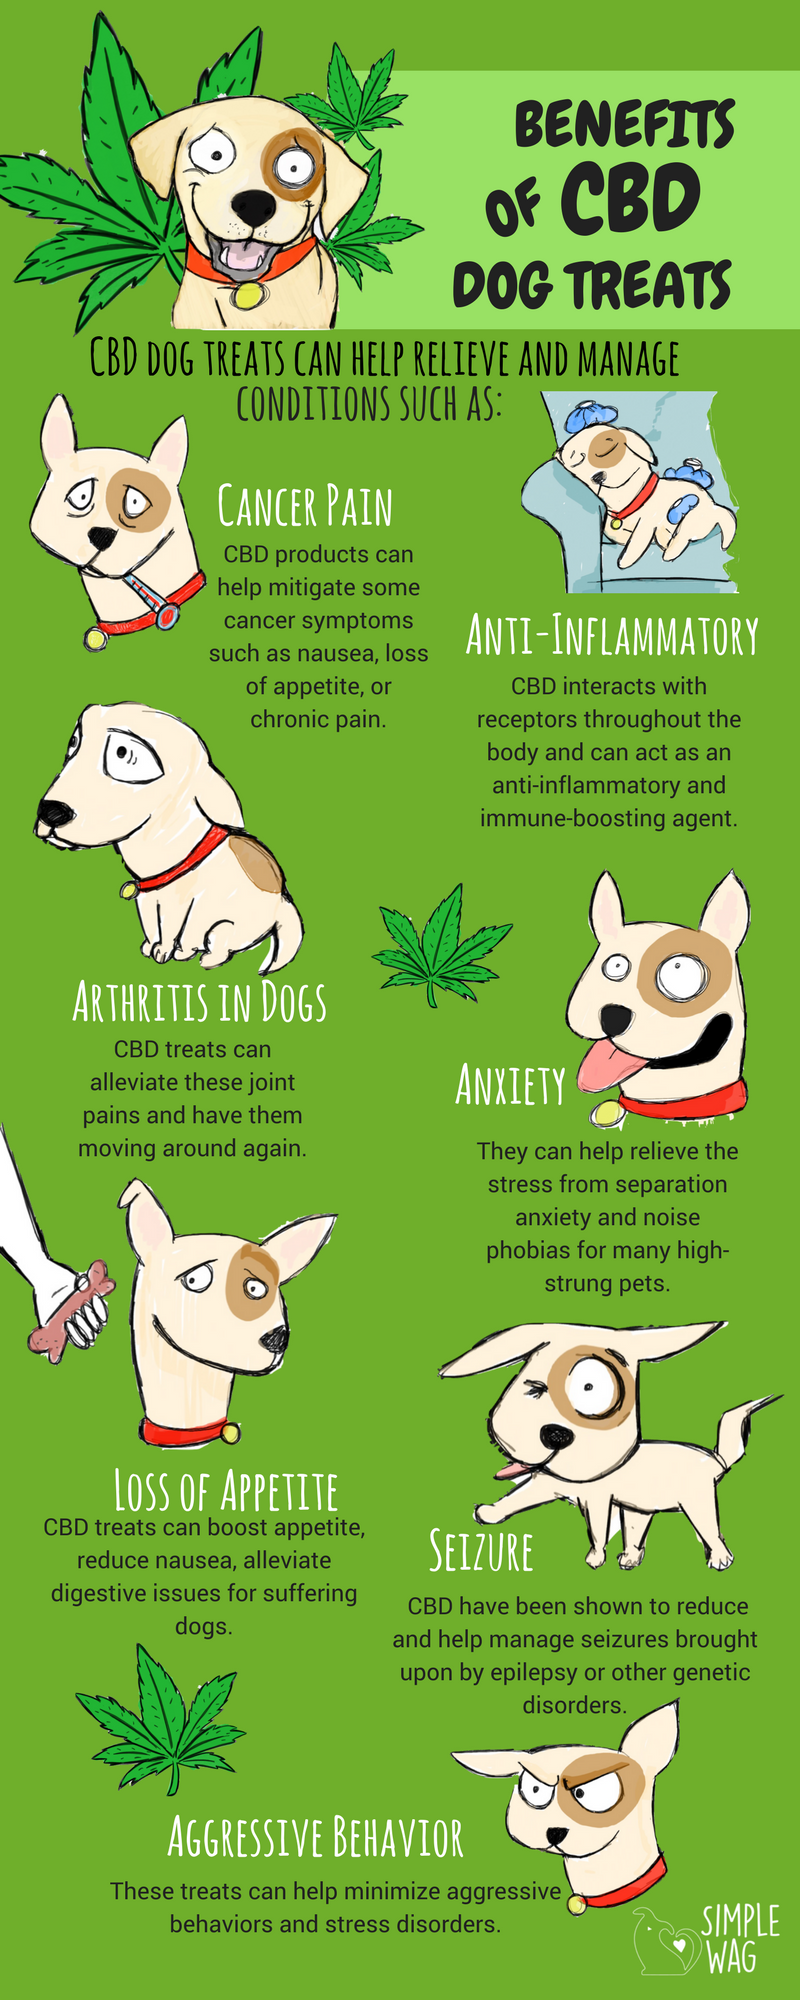 cannabis-cbd-oil-for-dogs-pets-marijuana-benifits